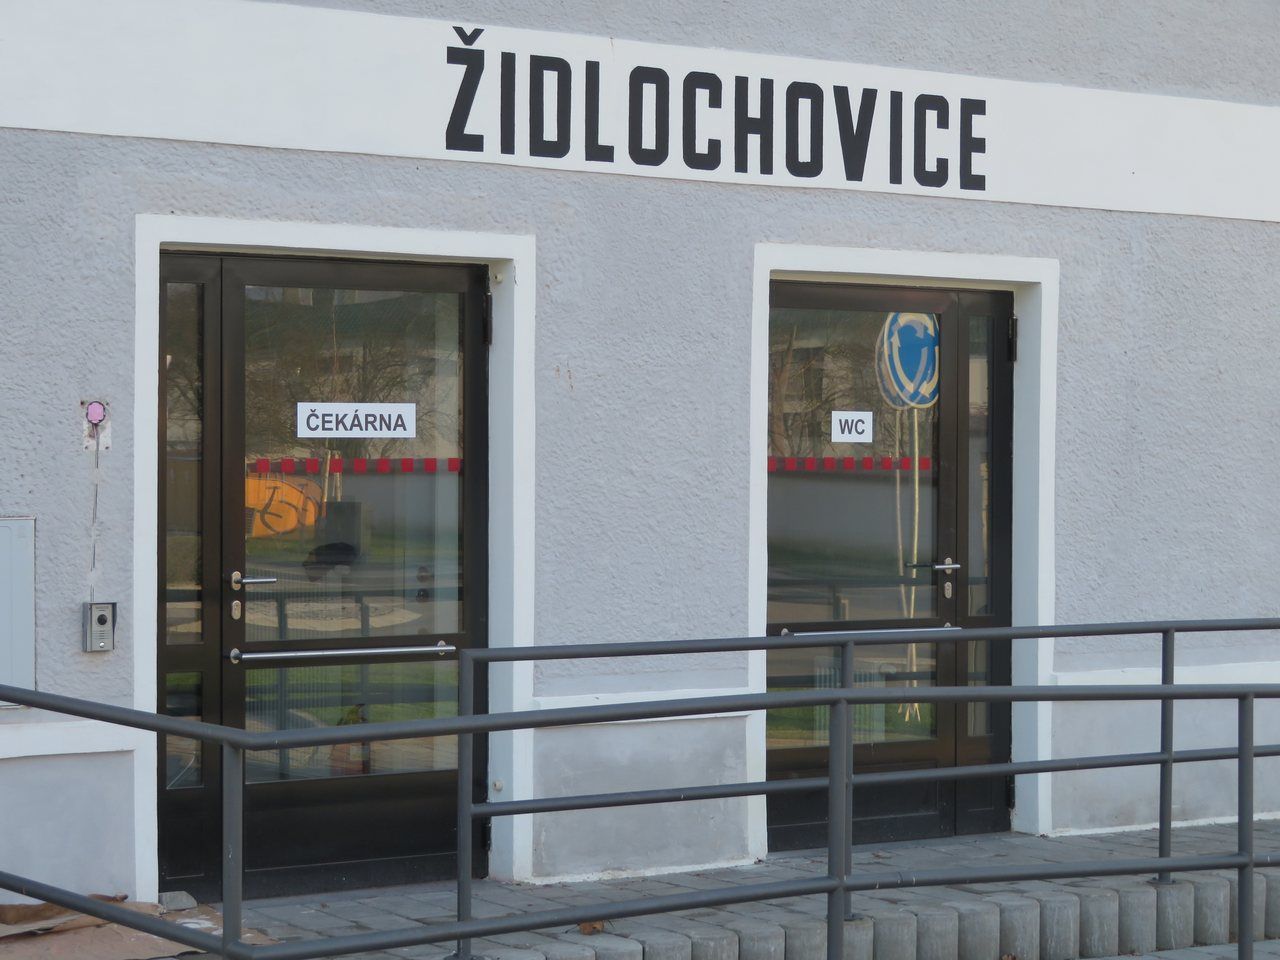 idlochovice, 24. 11. 2019